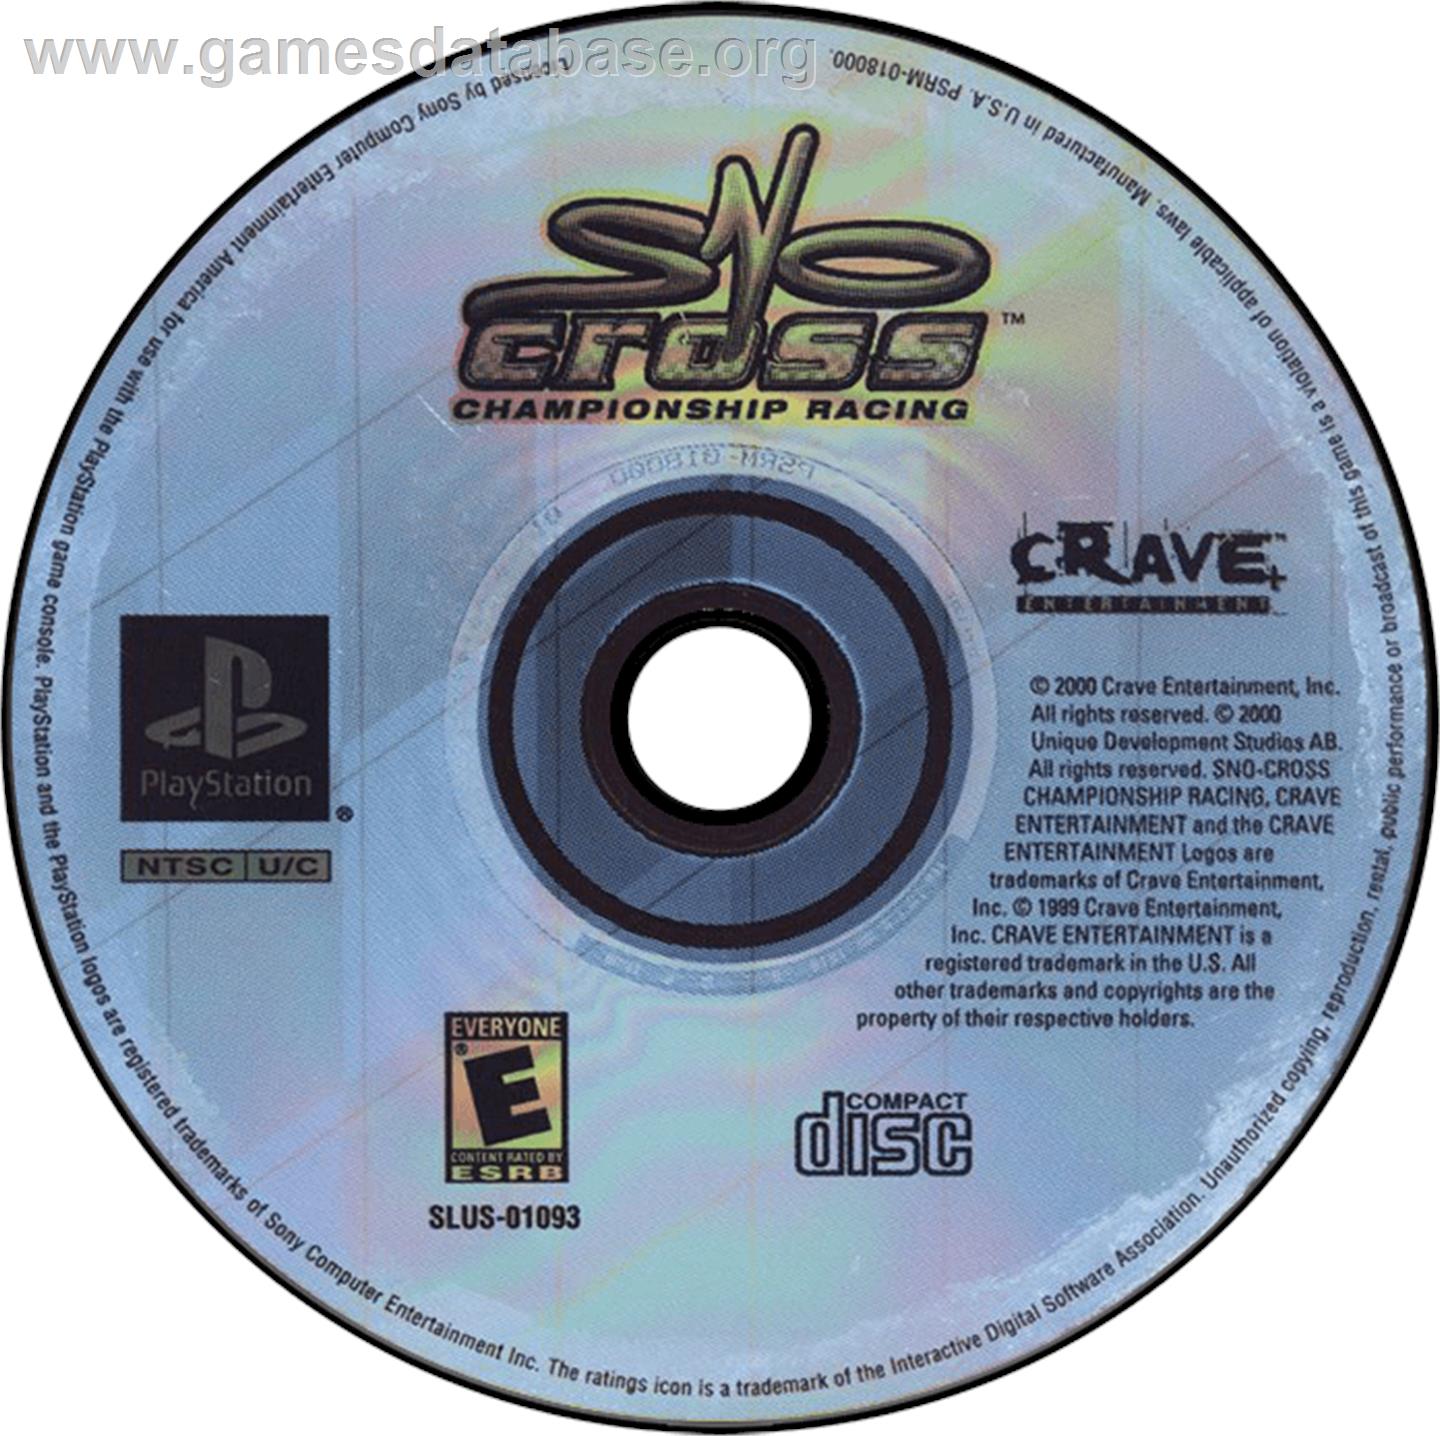 Sno-Cross Championship Racing - Sony Playstation - Artwork - Disc